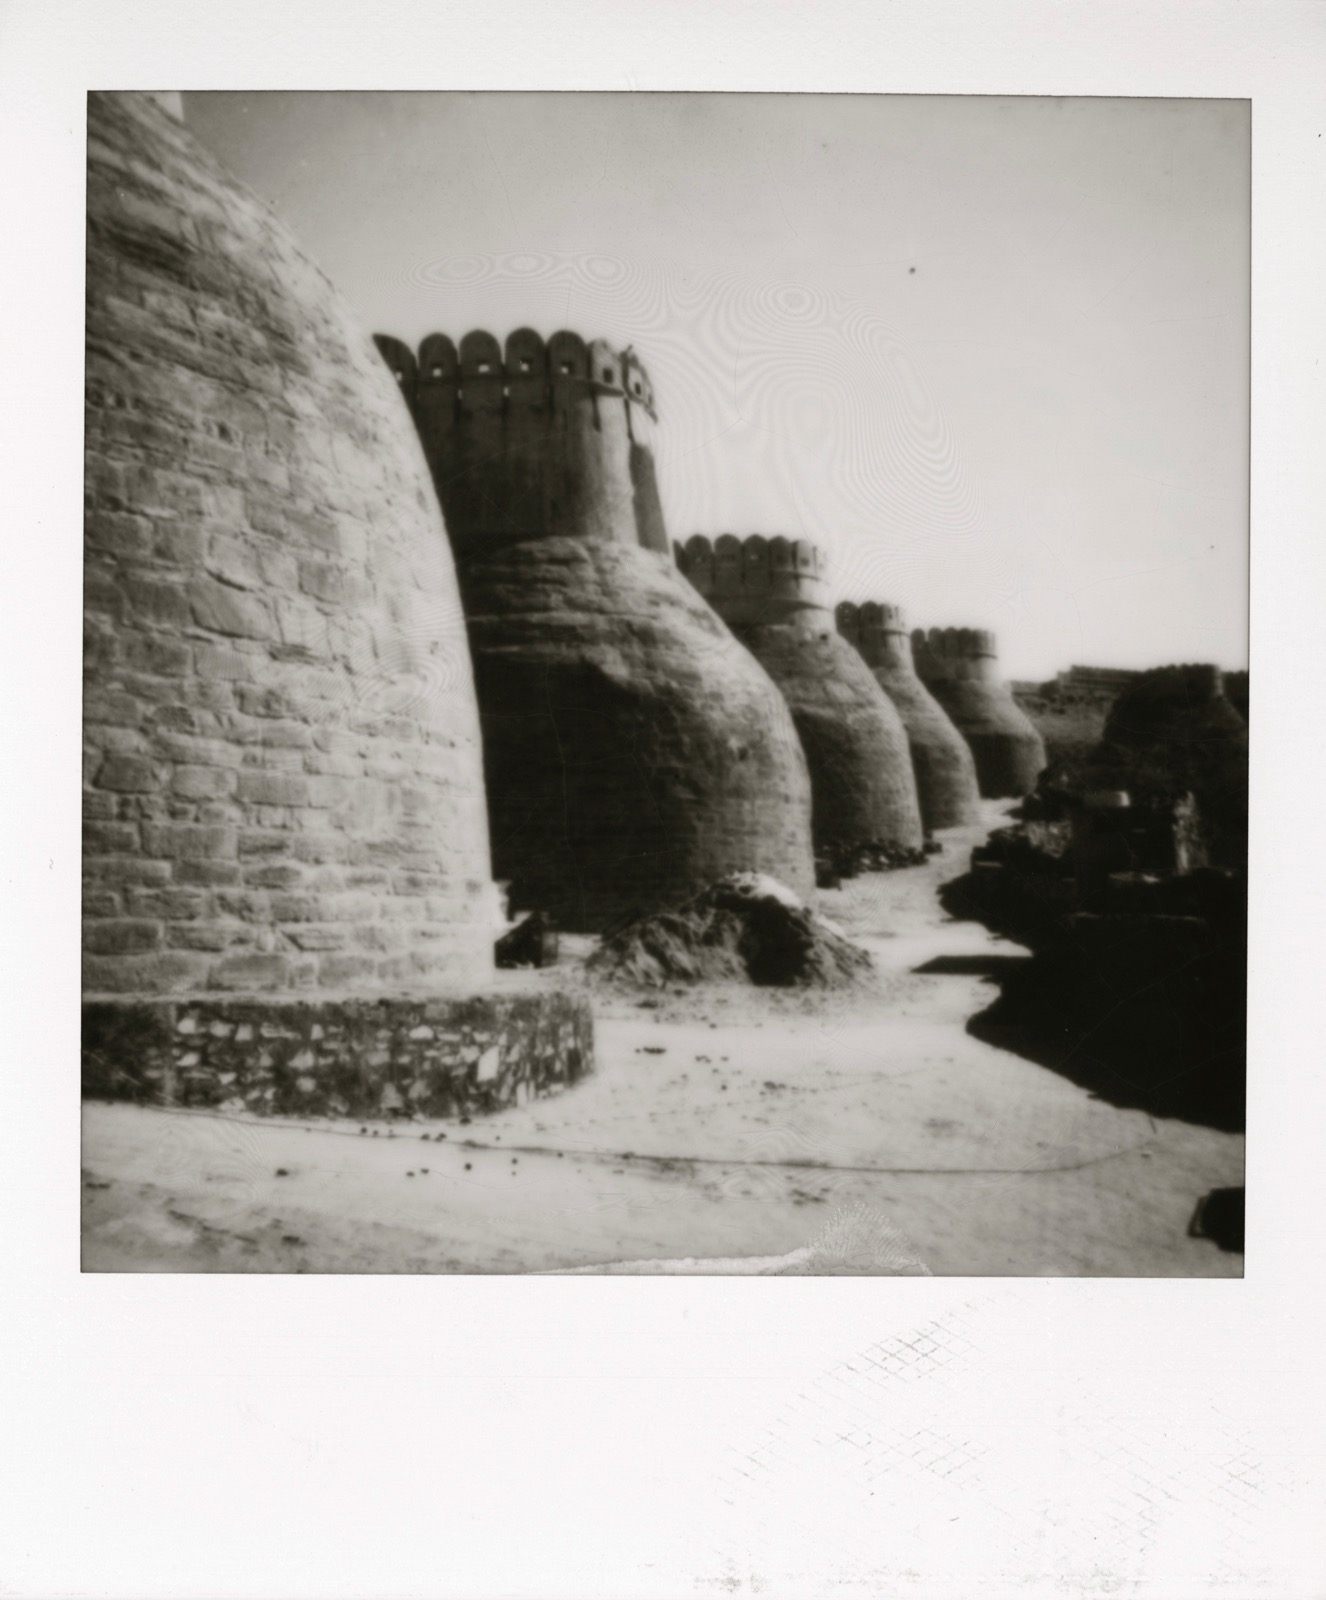 Kumalgarh Fortress